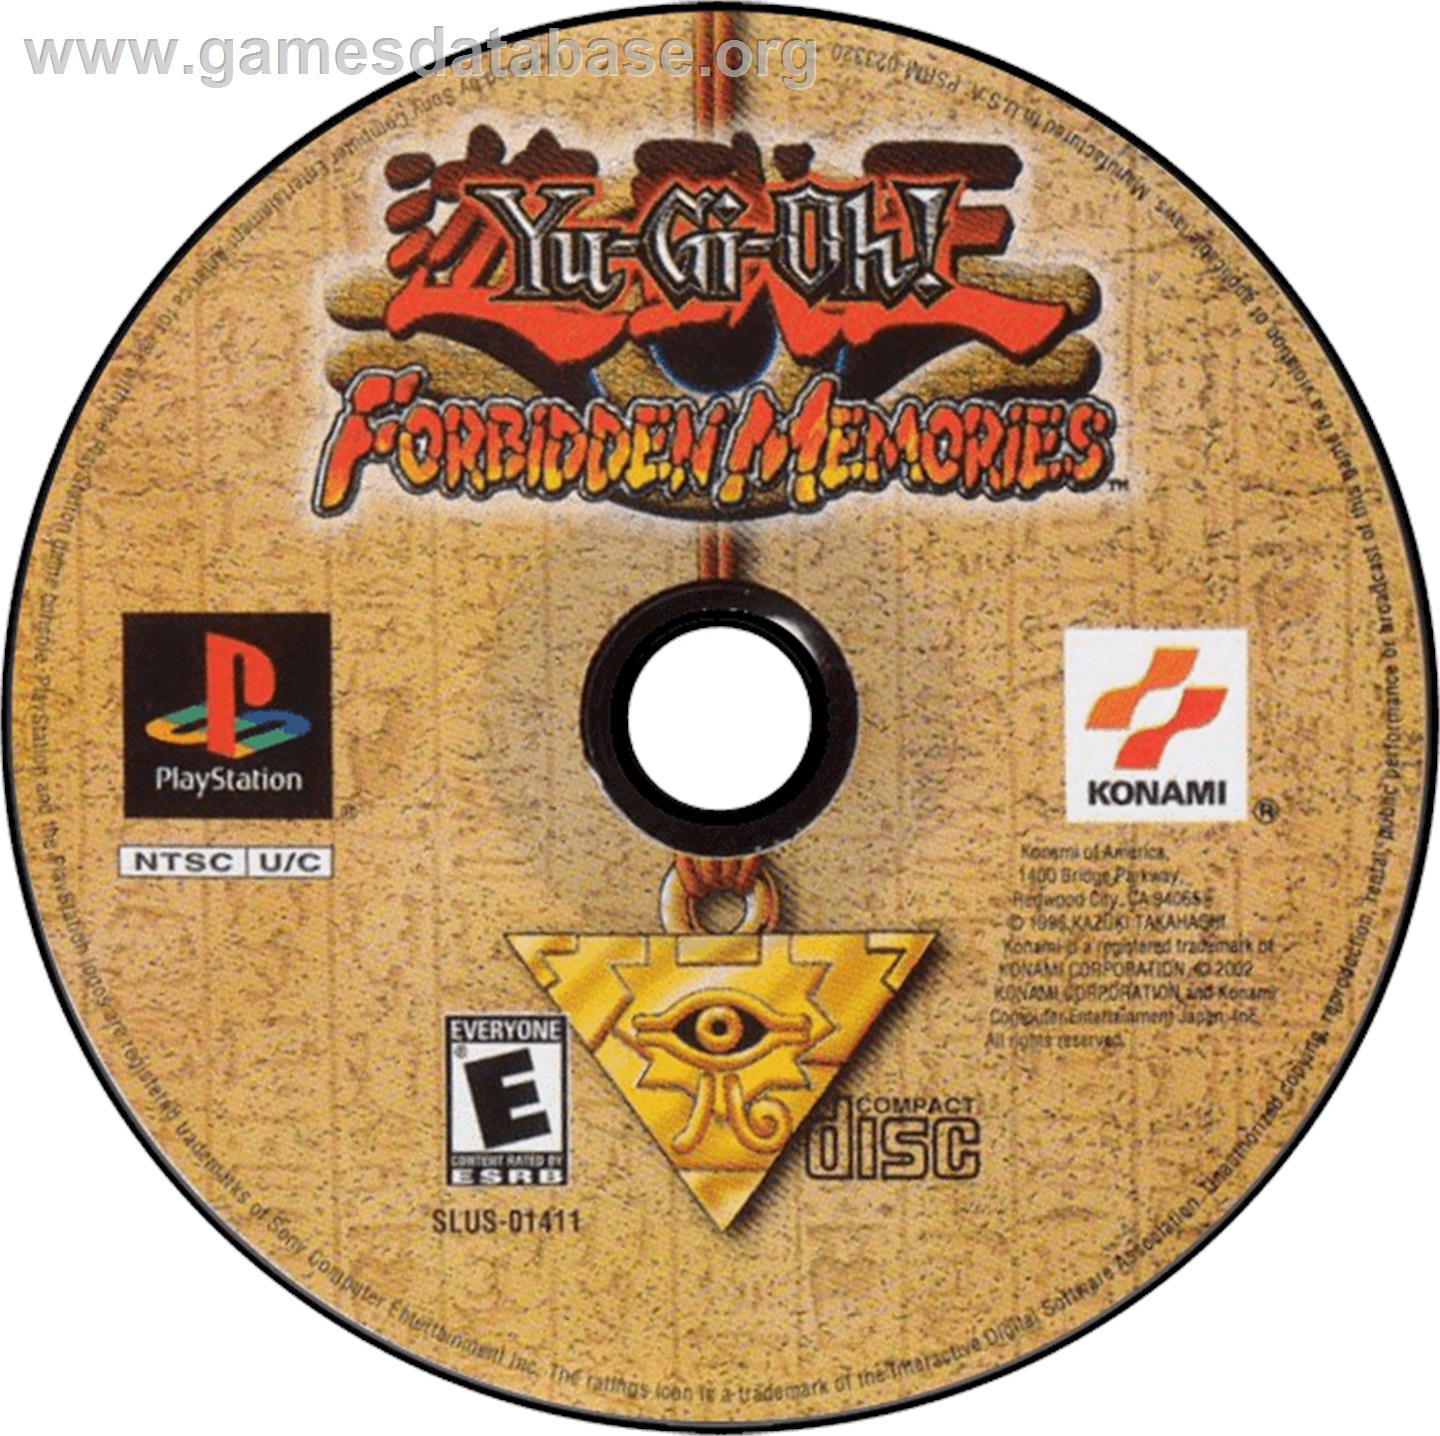 Yu-Gi-Oh!: Forbidden Memories - Sony Playstation - Artwork - Disc